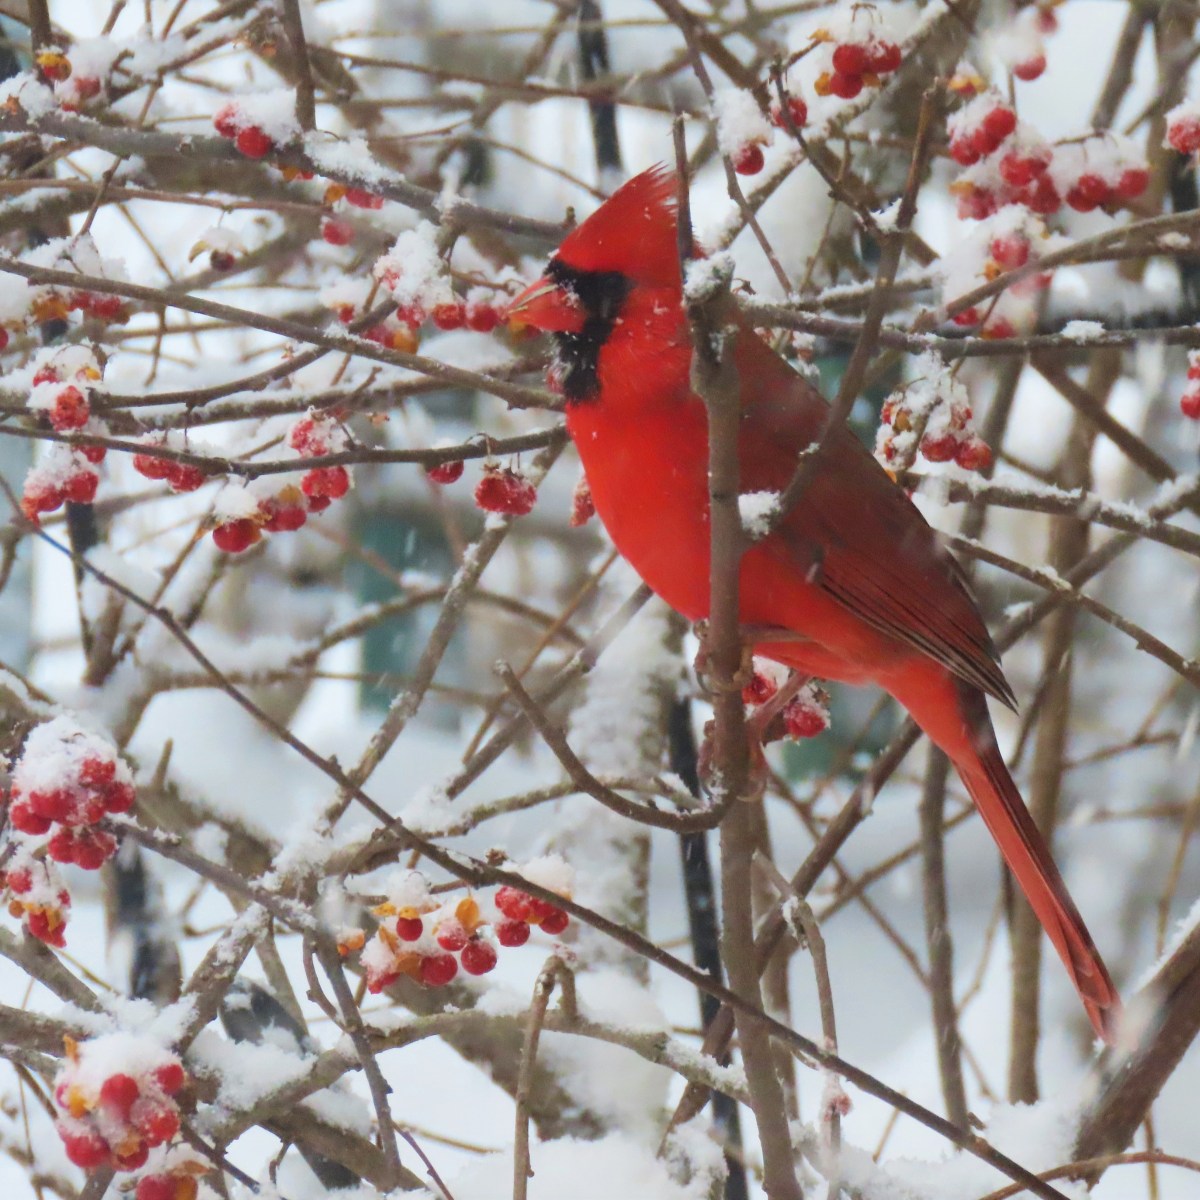 Male Cardinal in snow eating berries